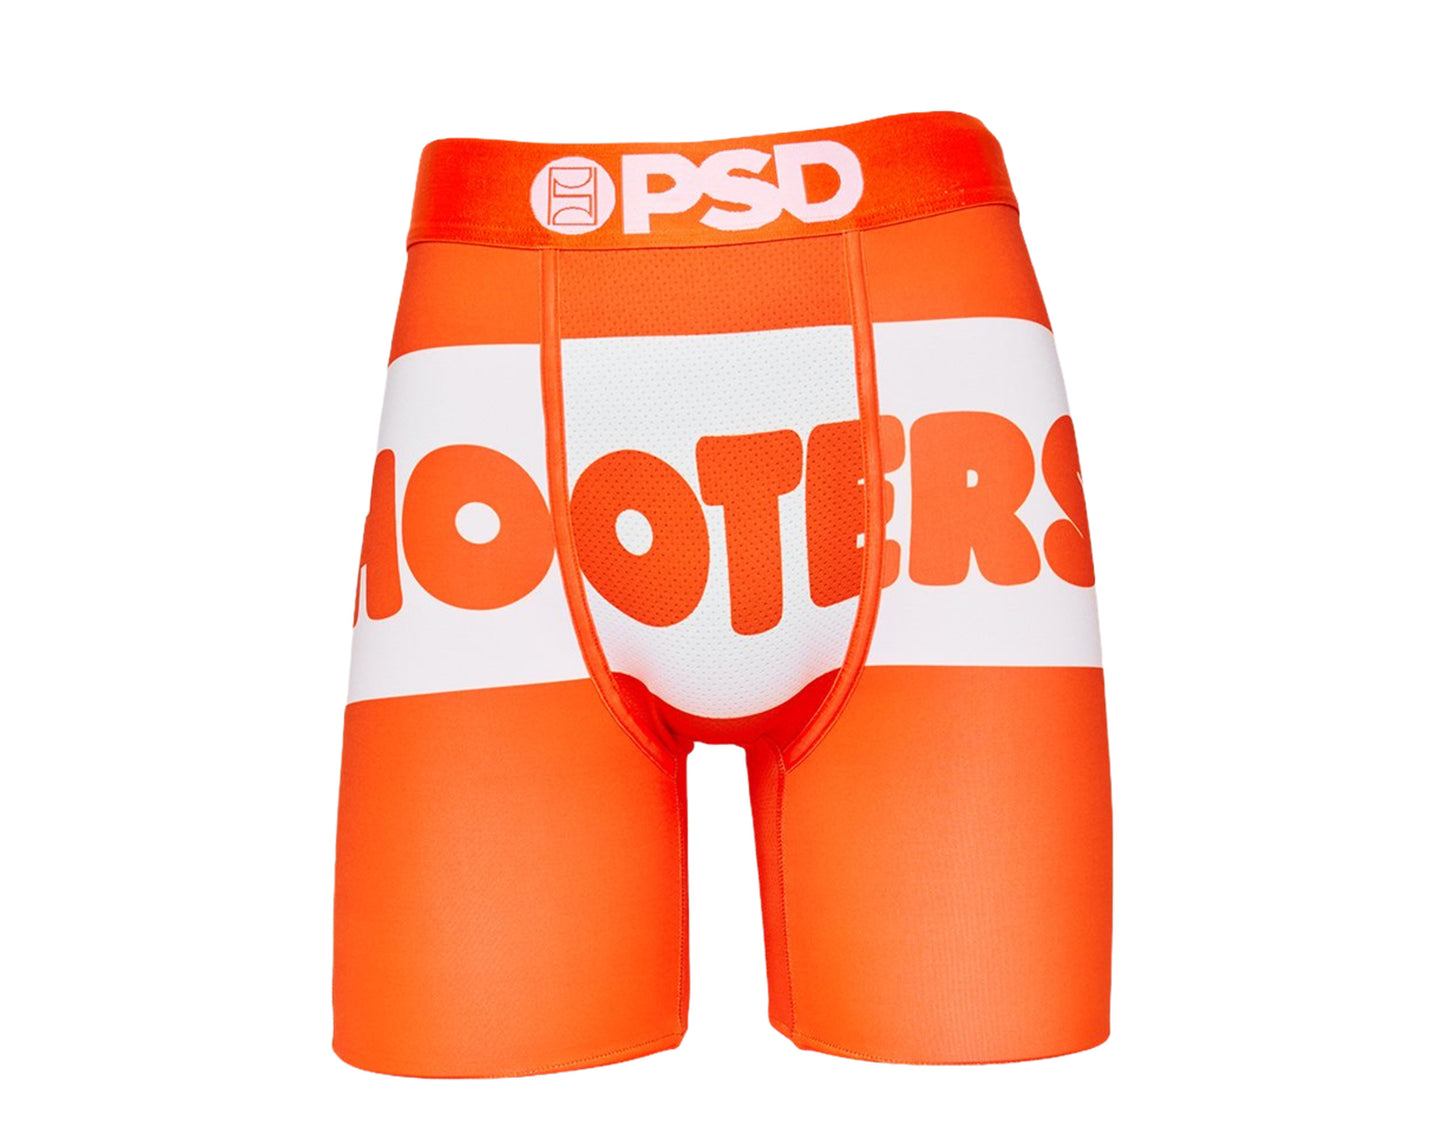 PSD Hooters - Corp Logo Boxer Briefs Men's Underwear